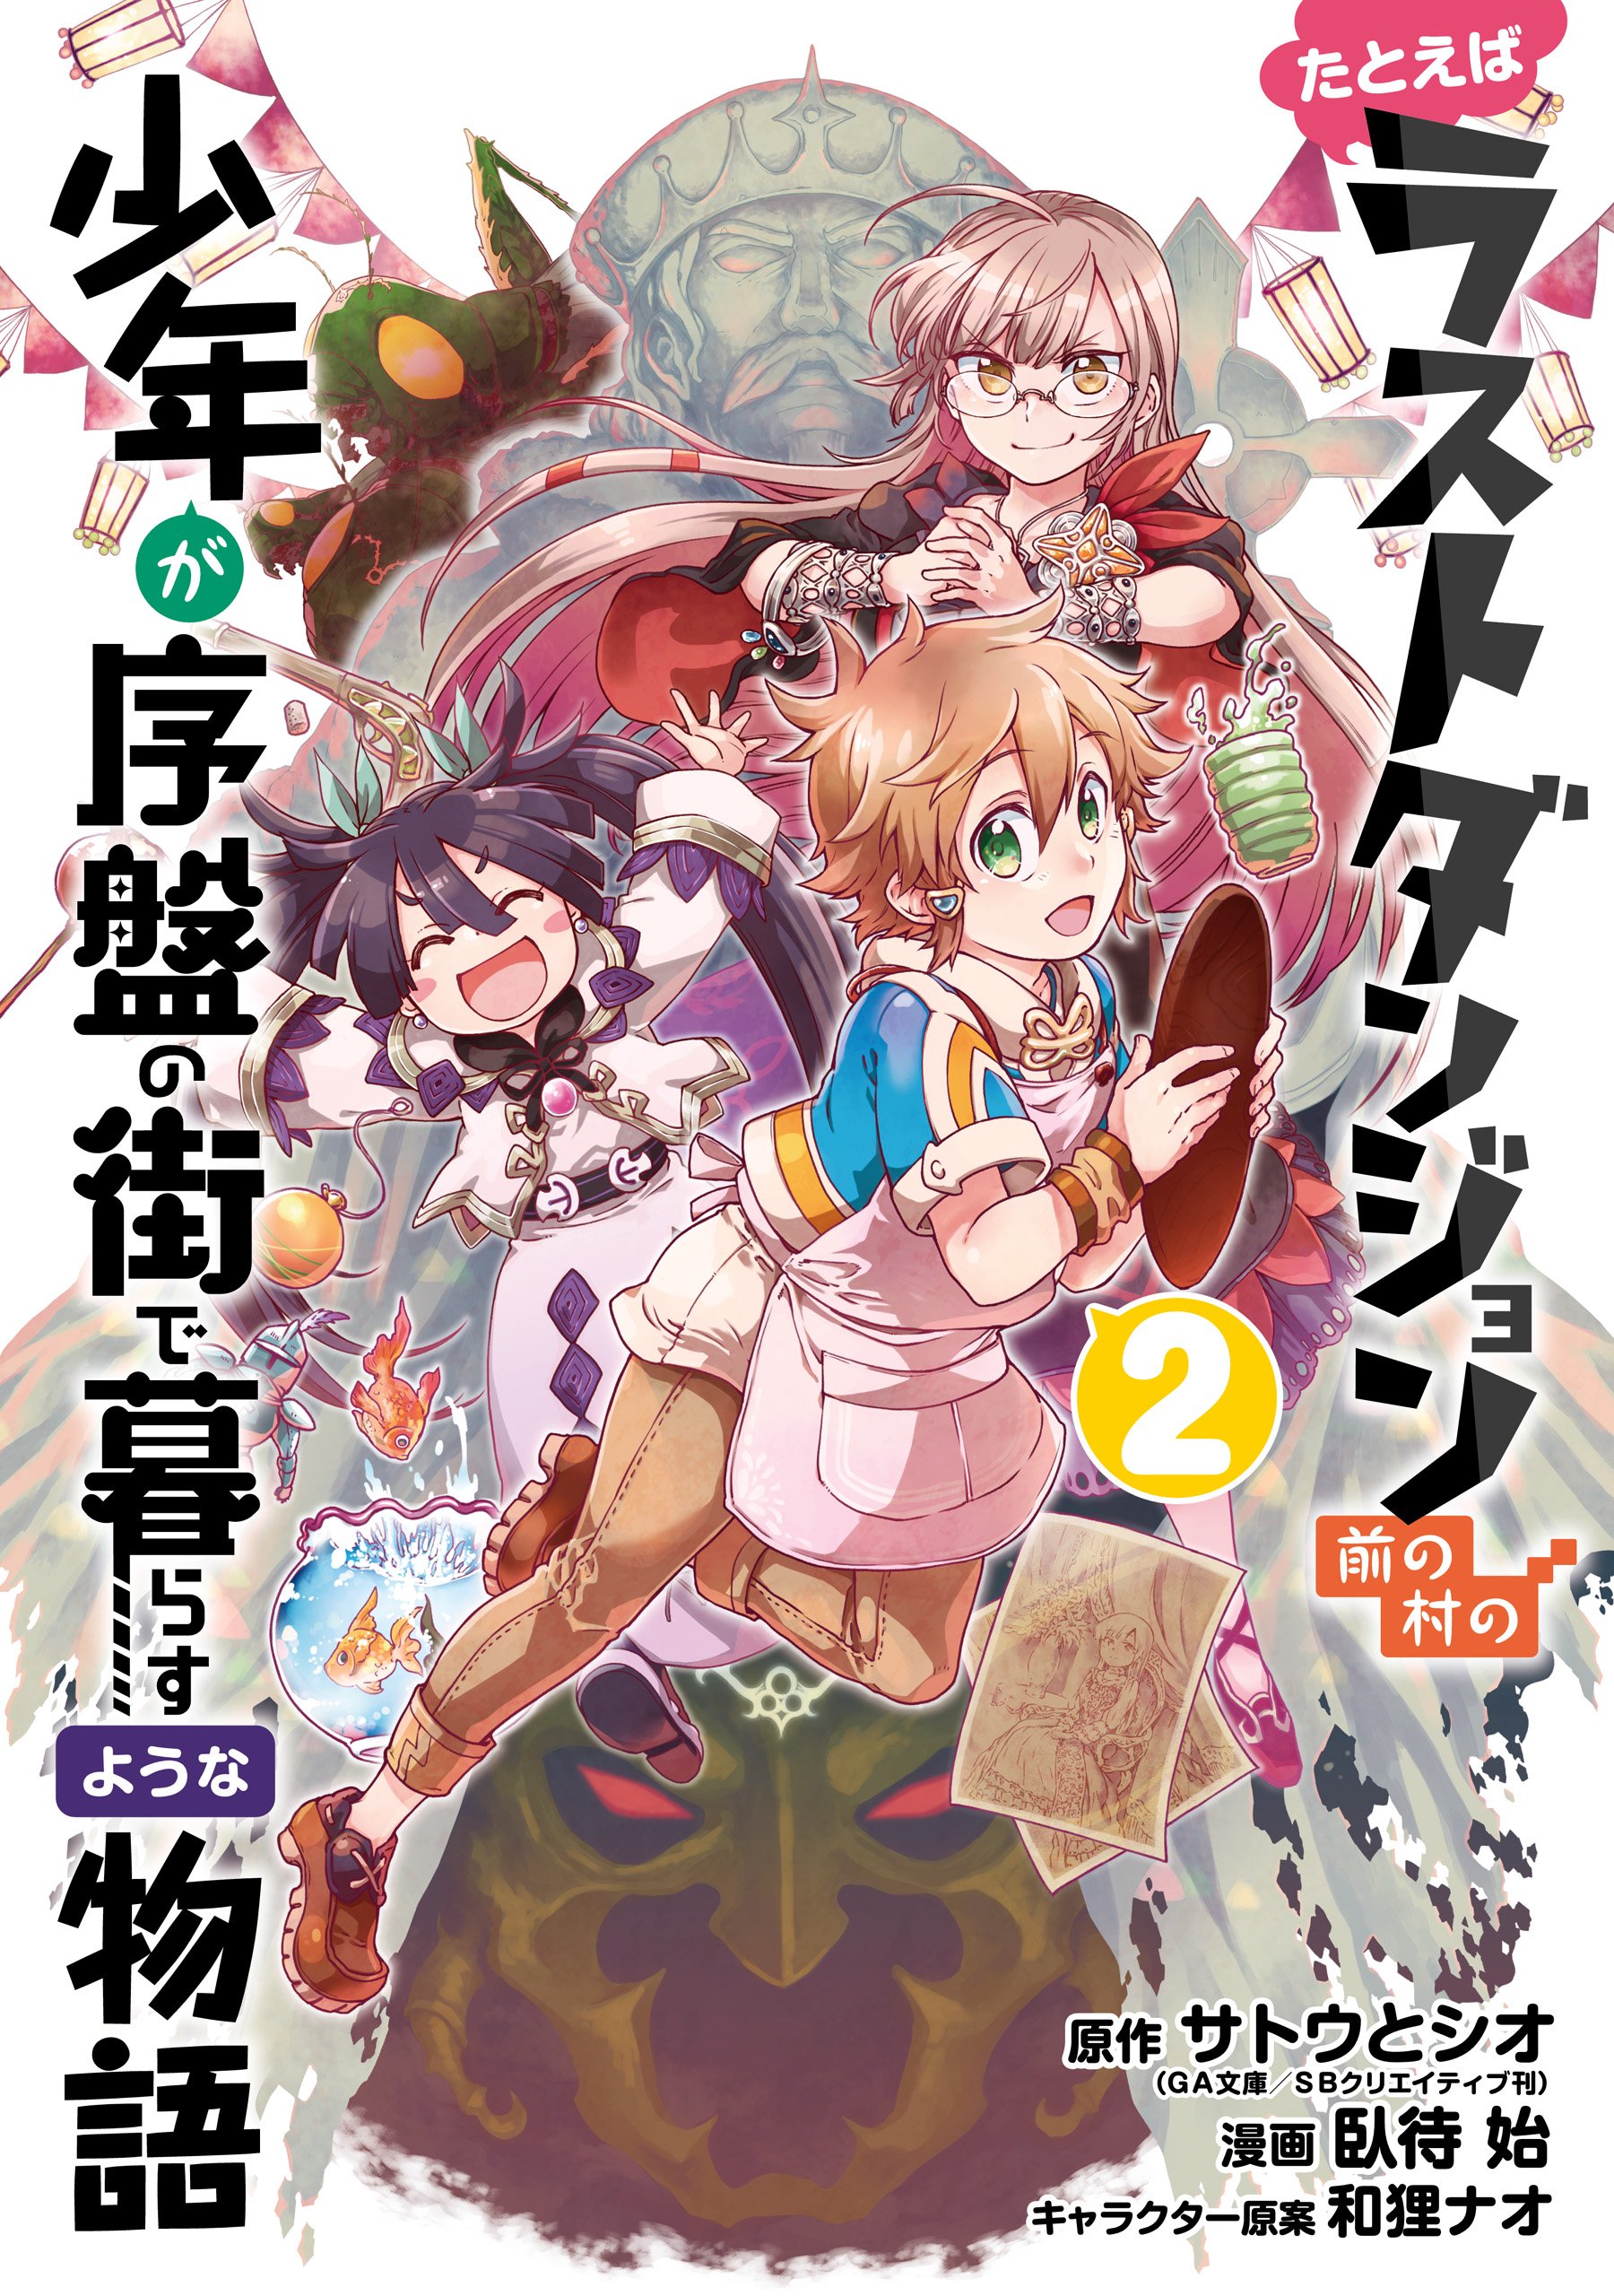 Japanese Manga Comic Book TATOEBA LAST DUNGEON MAE NO MURA NO SHOUNEN 1-10  set